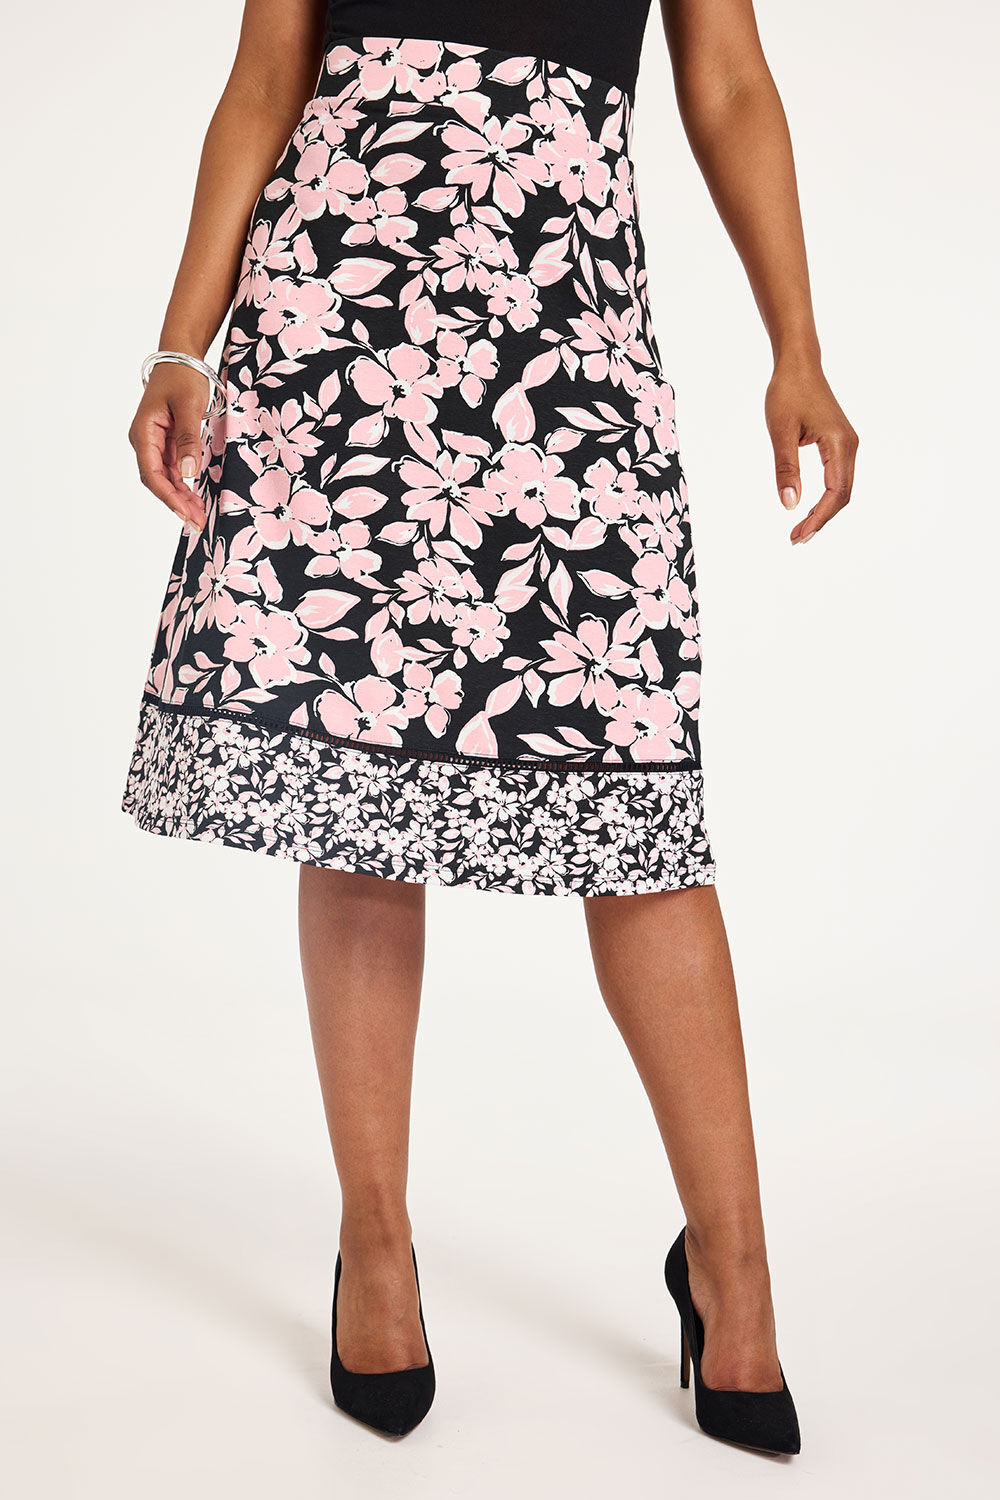 Bonmarche Black Floral Border Print A-Line Jersey Skirt, Size: 28